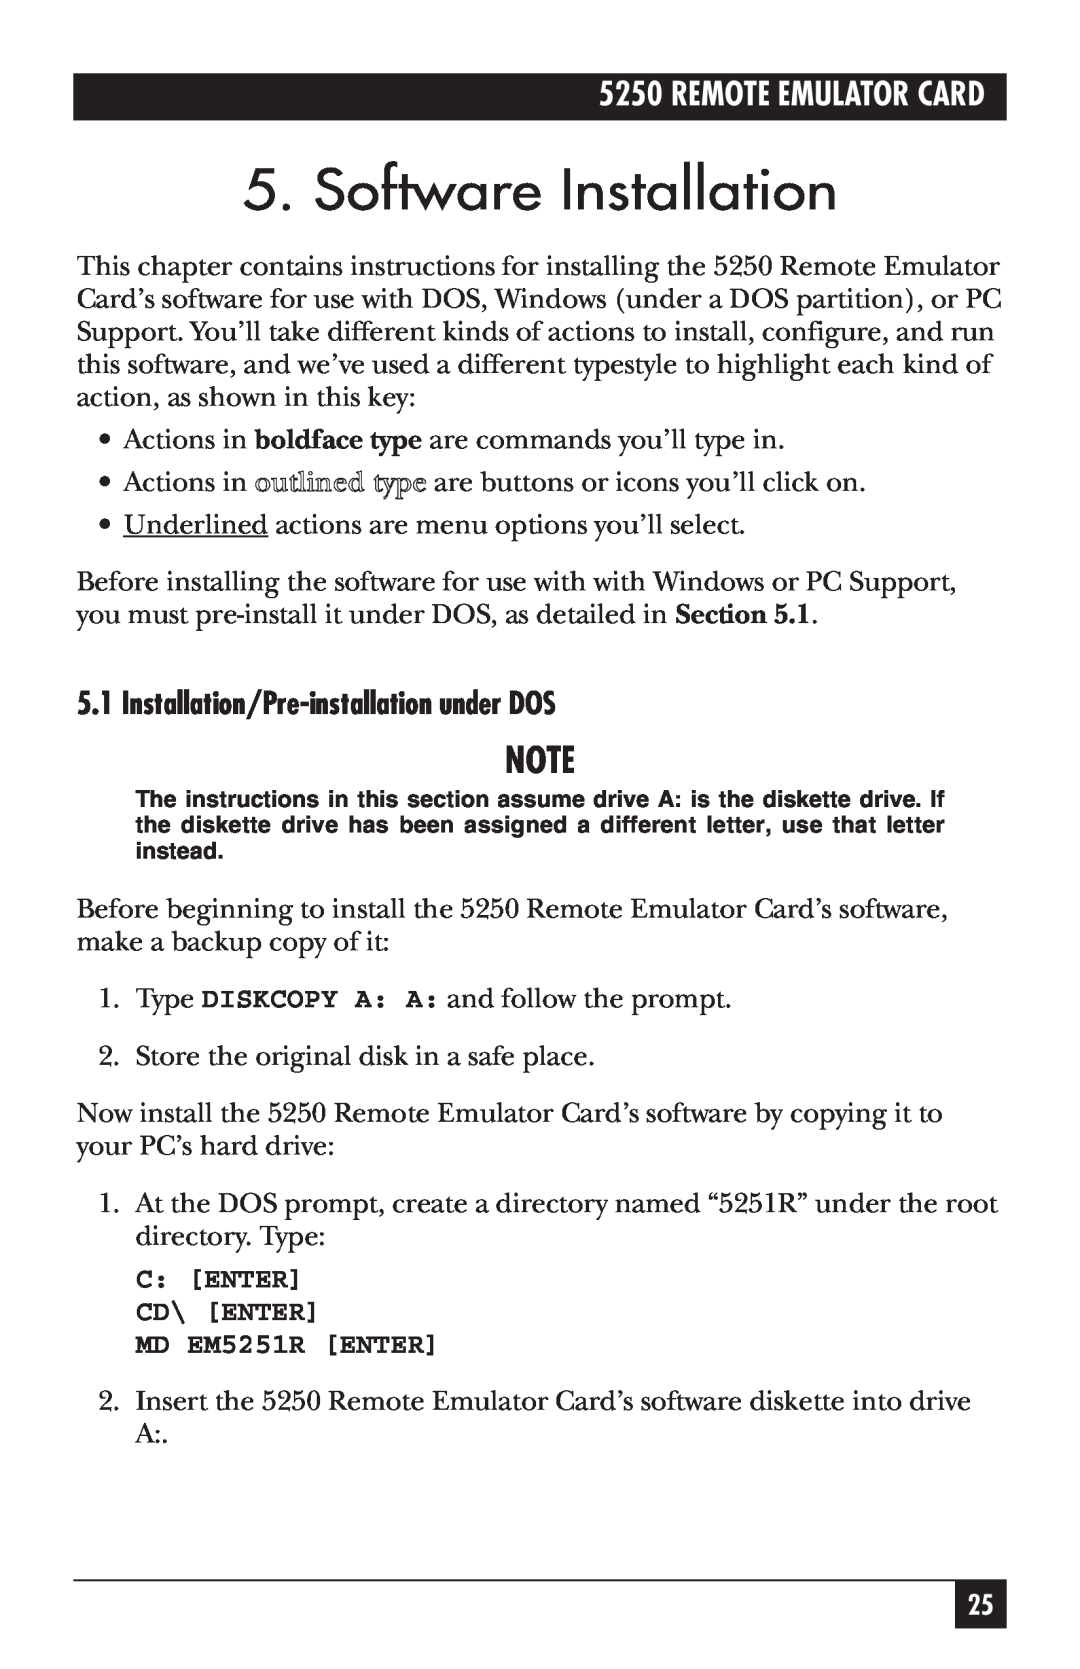 Black Box Remote Emulator Card, 5250 manual Software Installation, Installation/Pre-installationunder DOS 